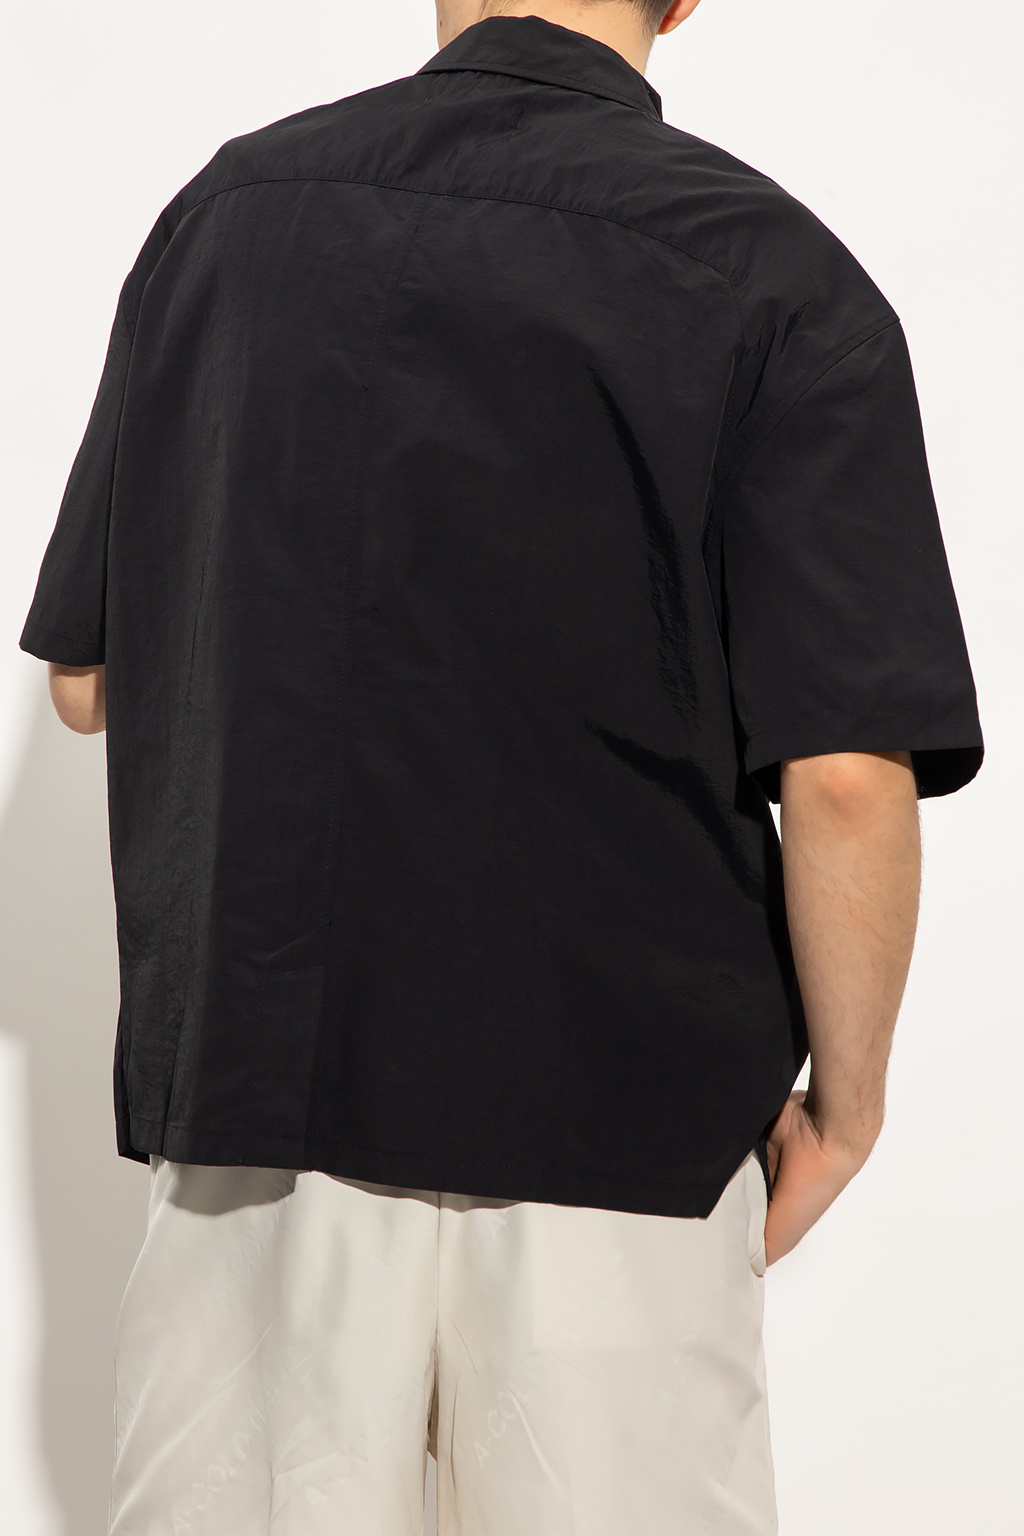 A-COLD-WALL* Short-sleeved CISO shirt